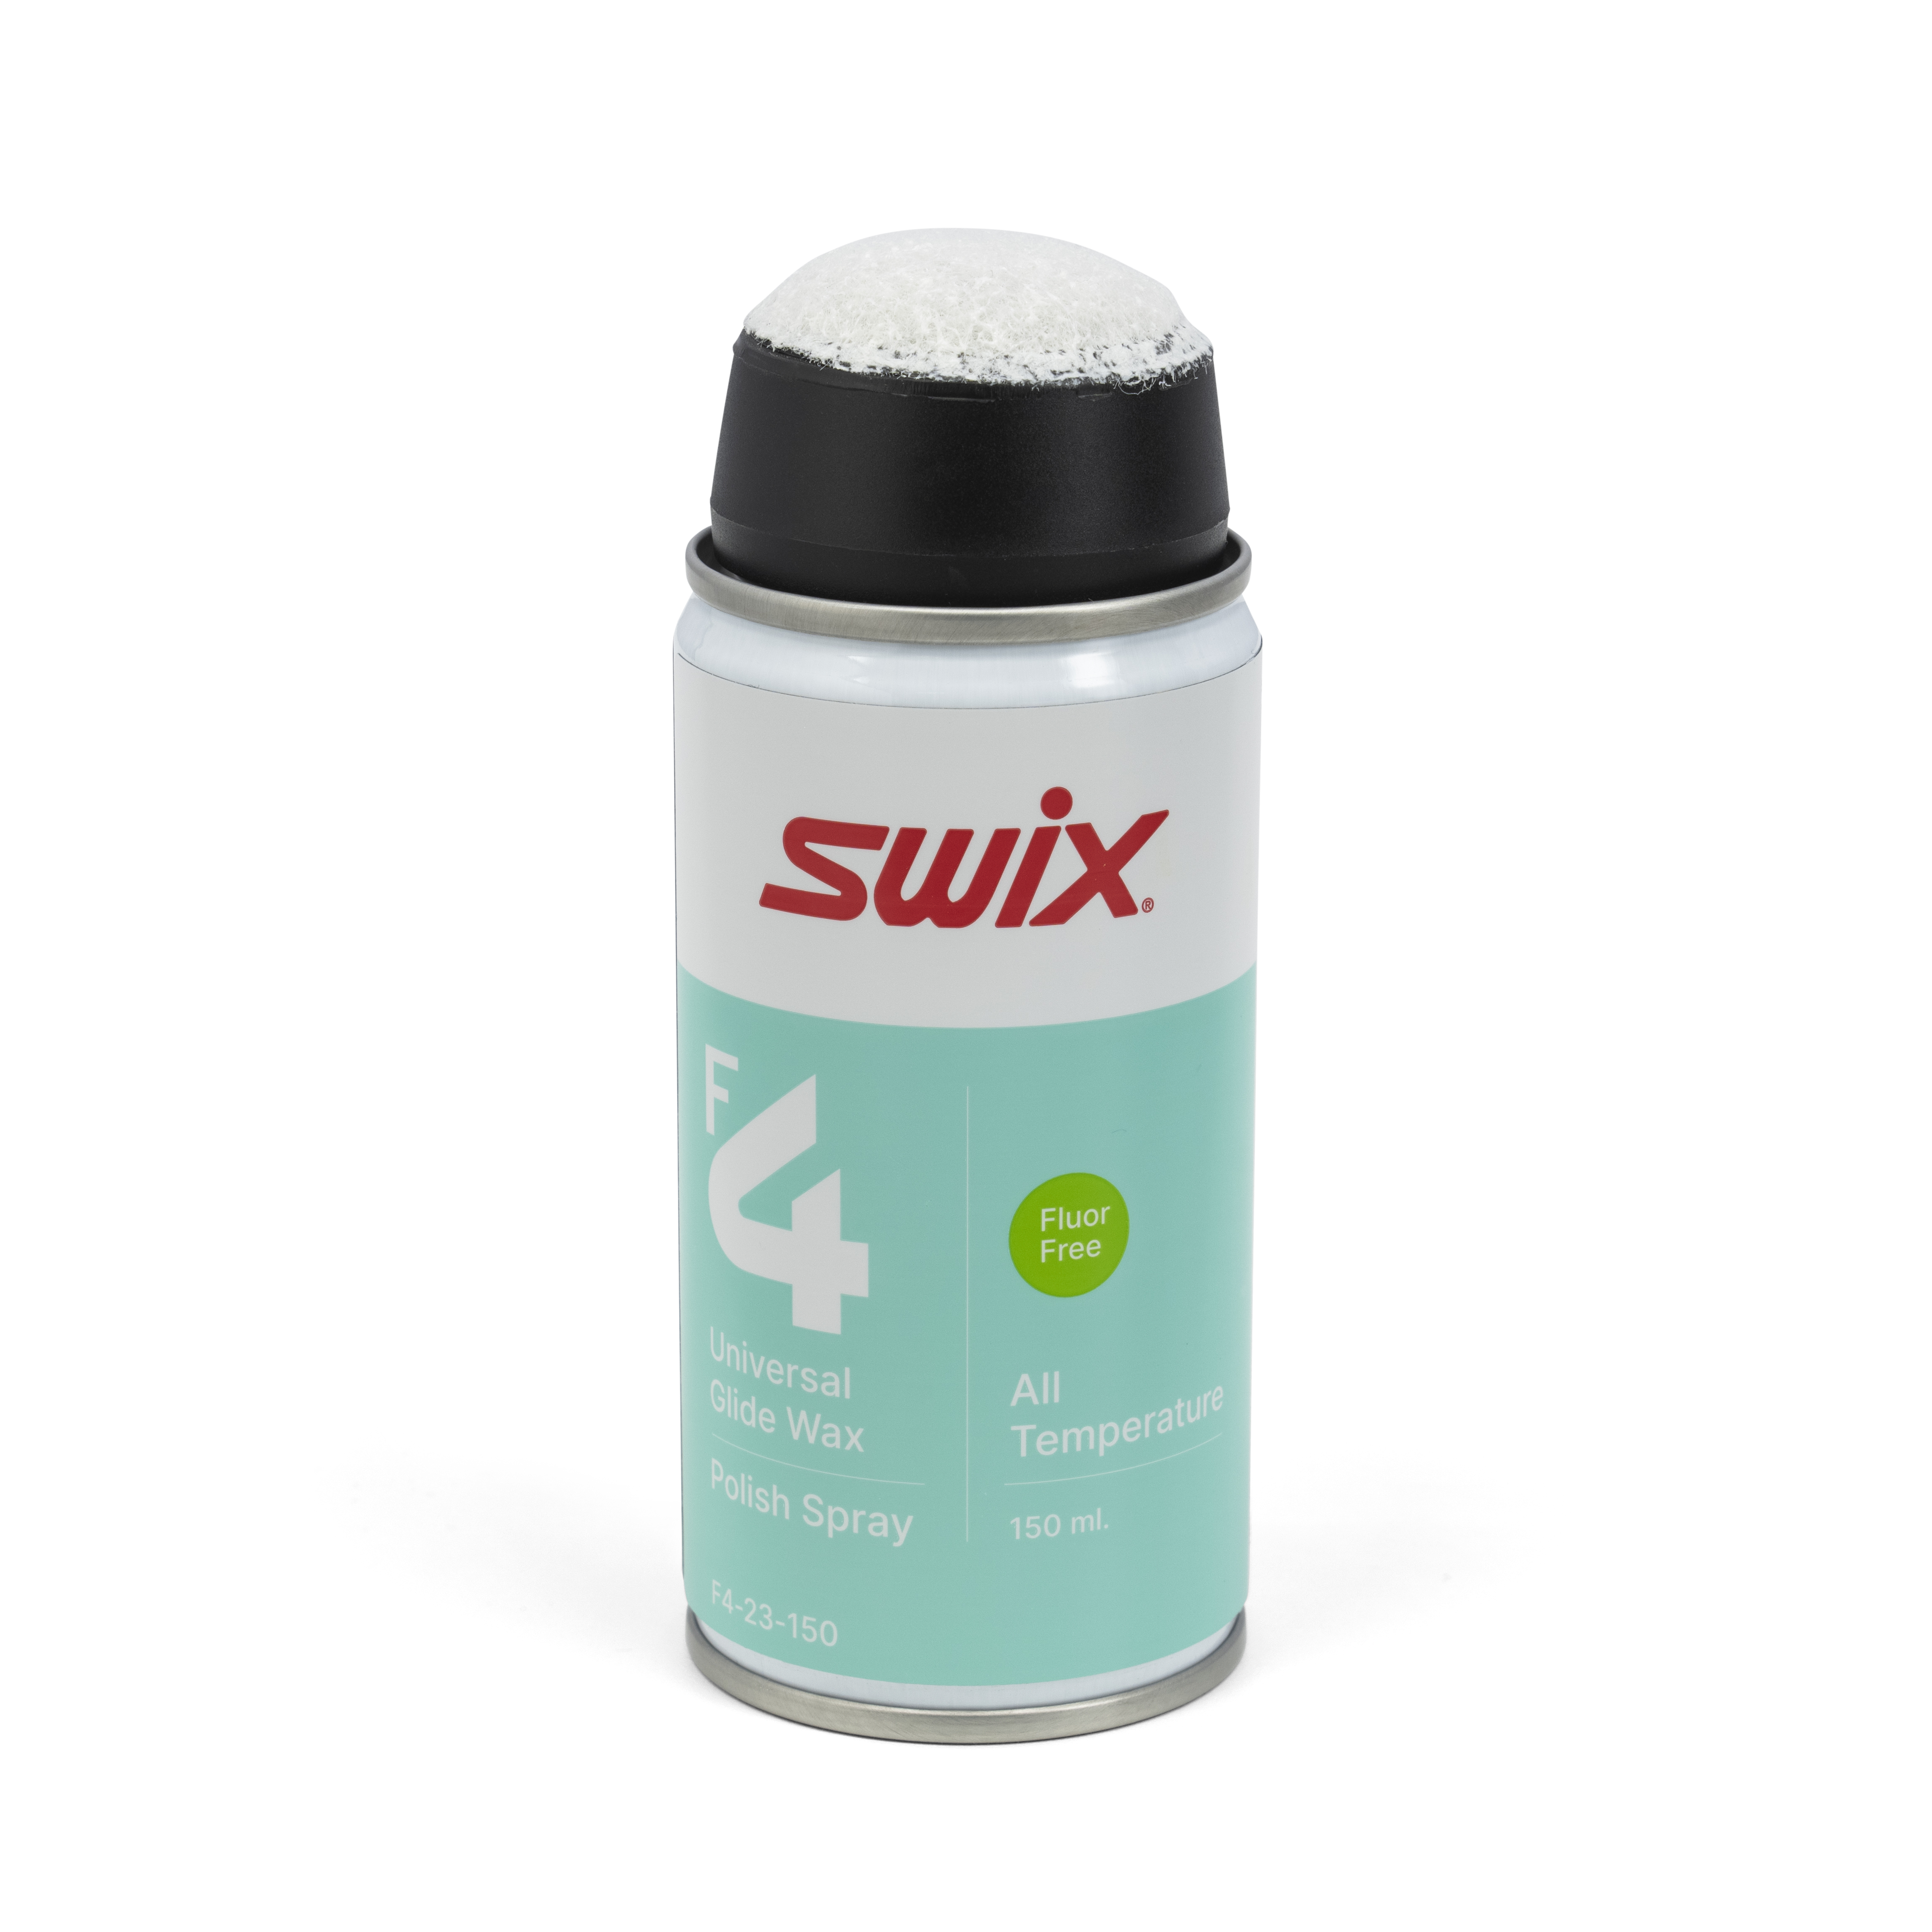 Glide Wax | Swix